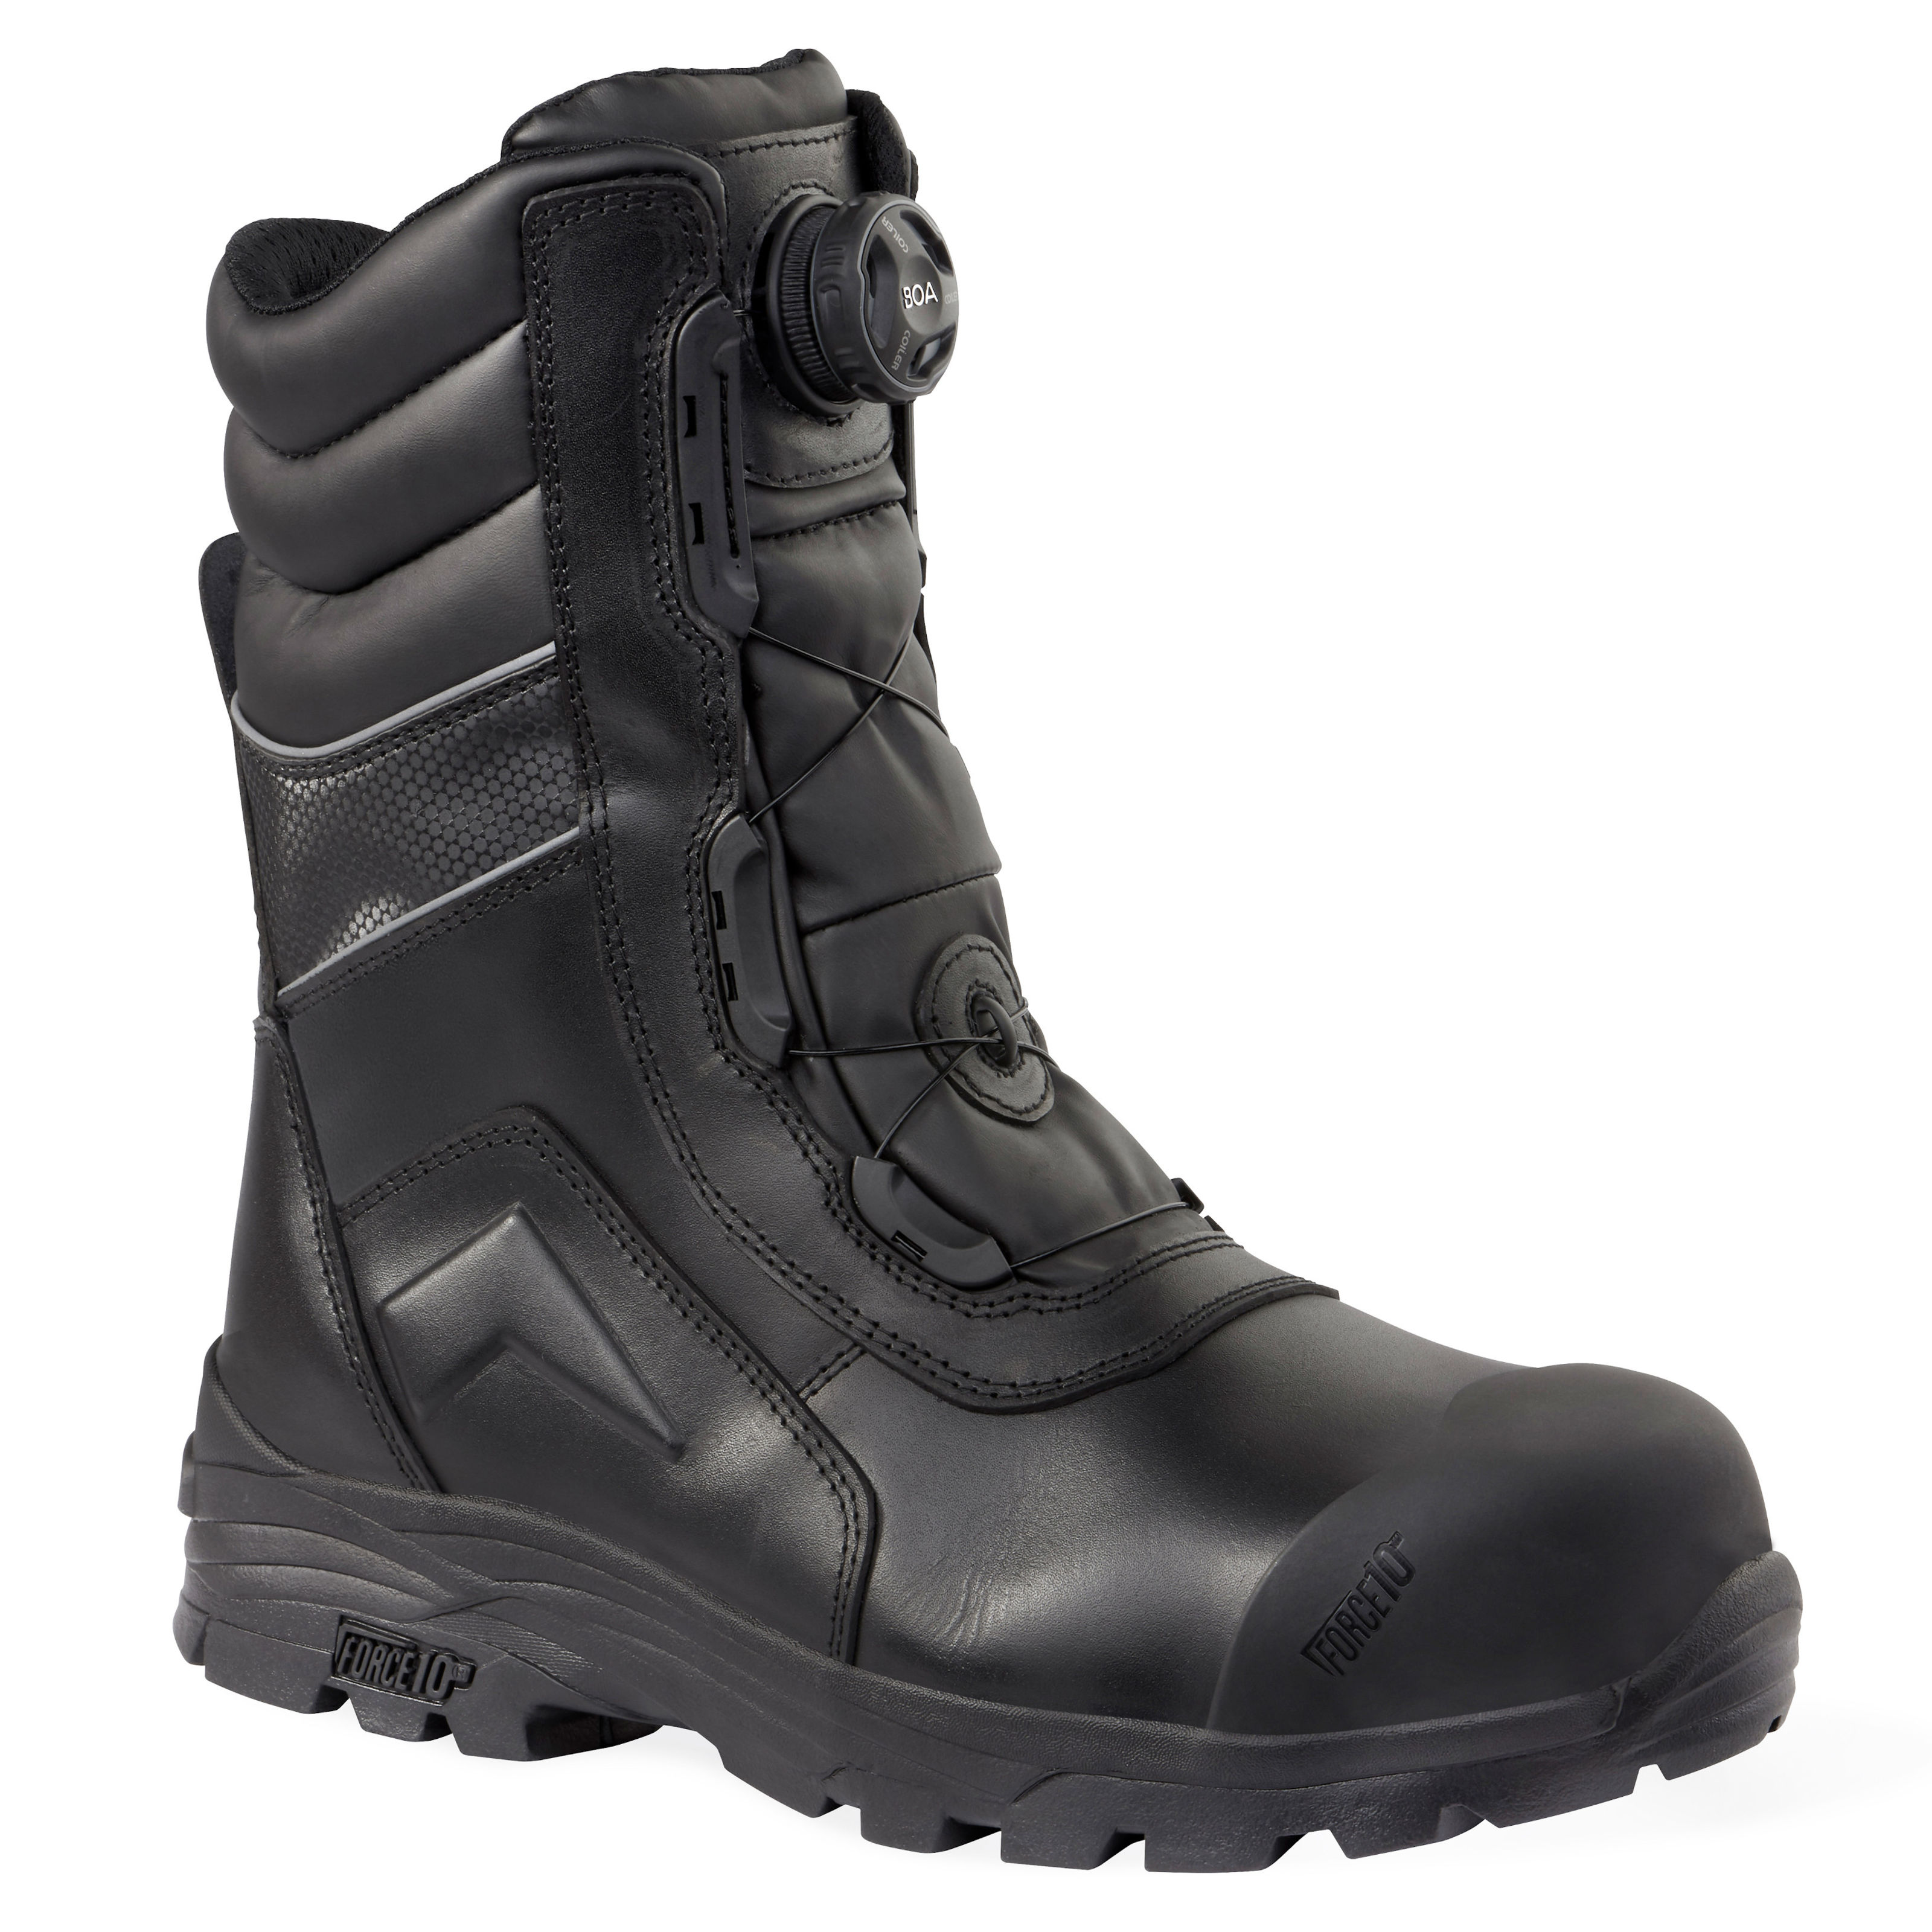 Rock Fall Magma Waterproof High-Leg Safety Boots